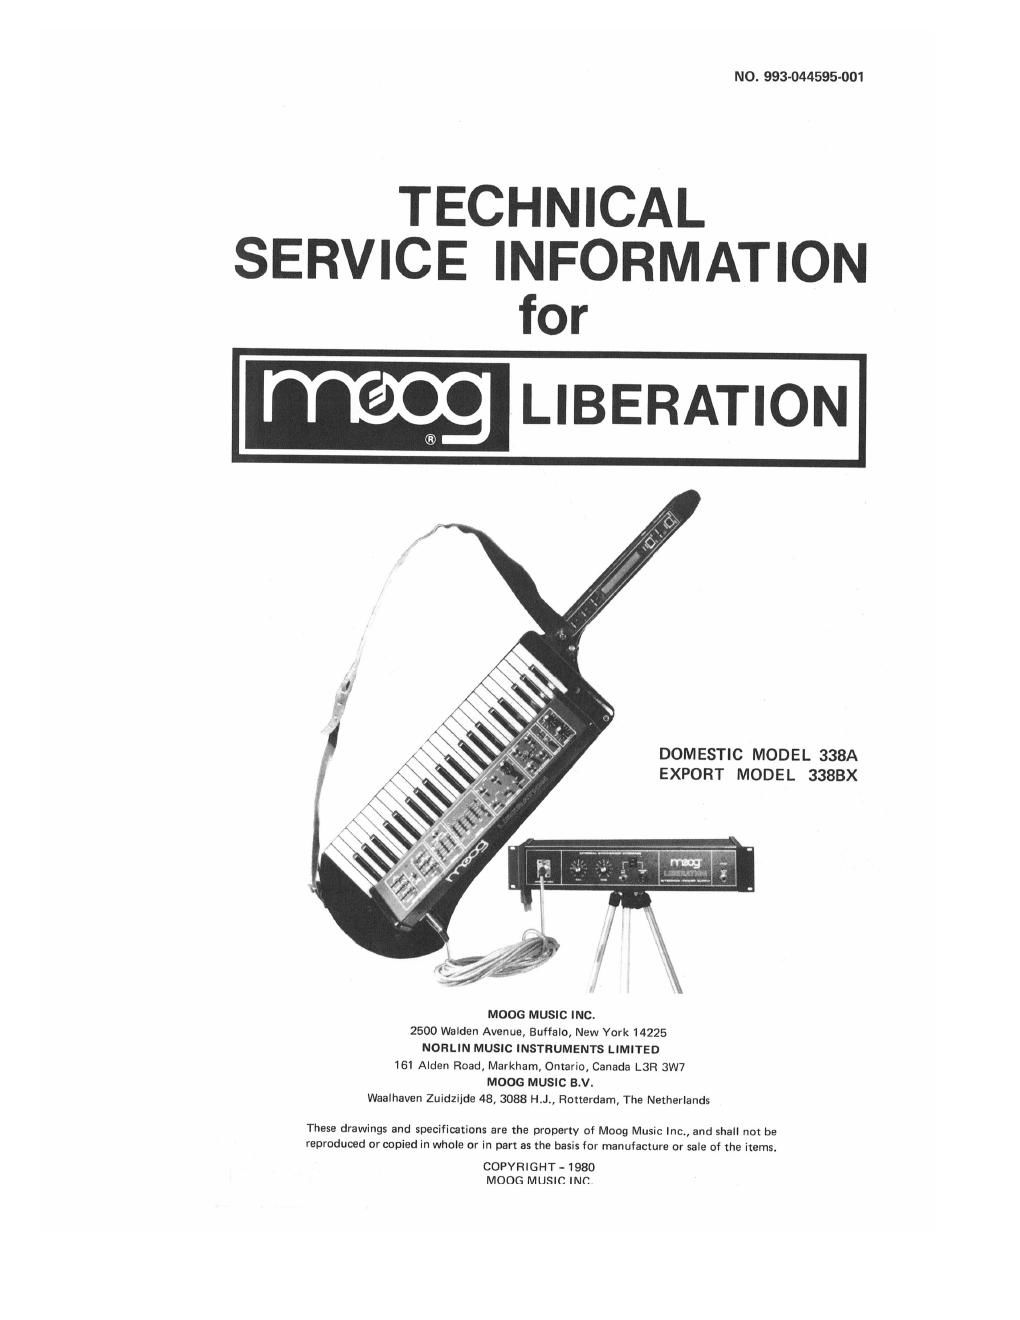 moog liberation service manual